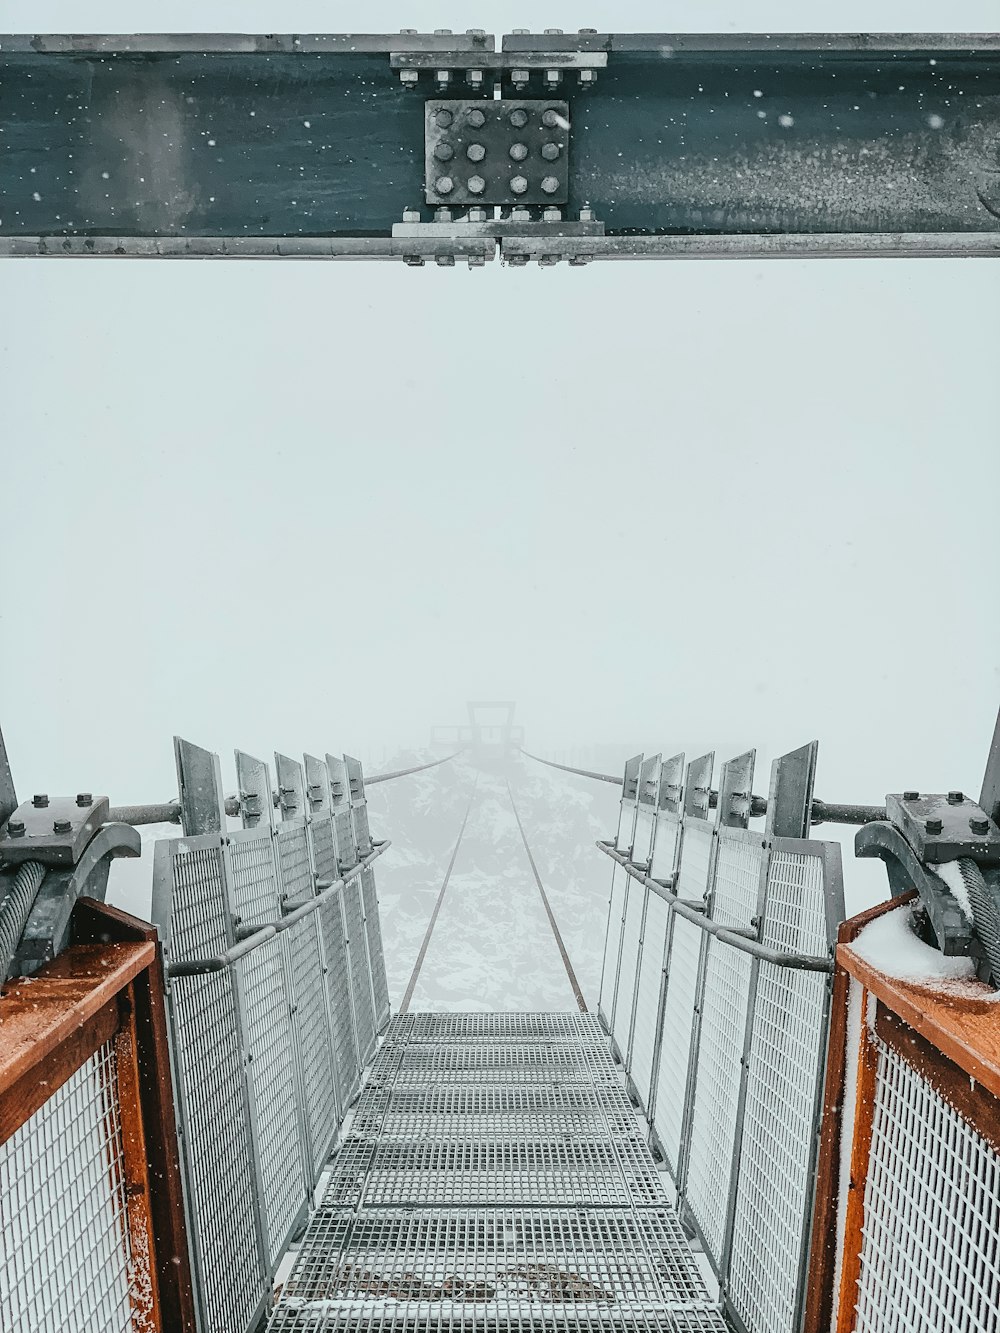 Brücke in Nebel gehüllt